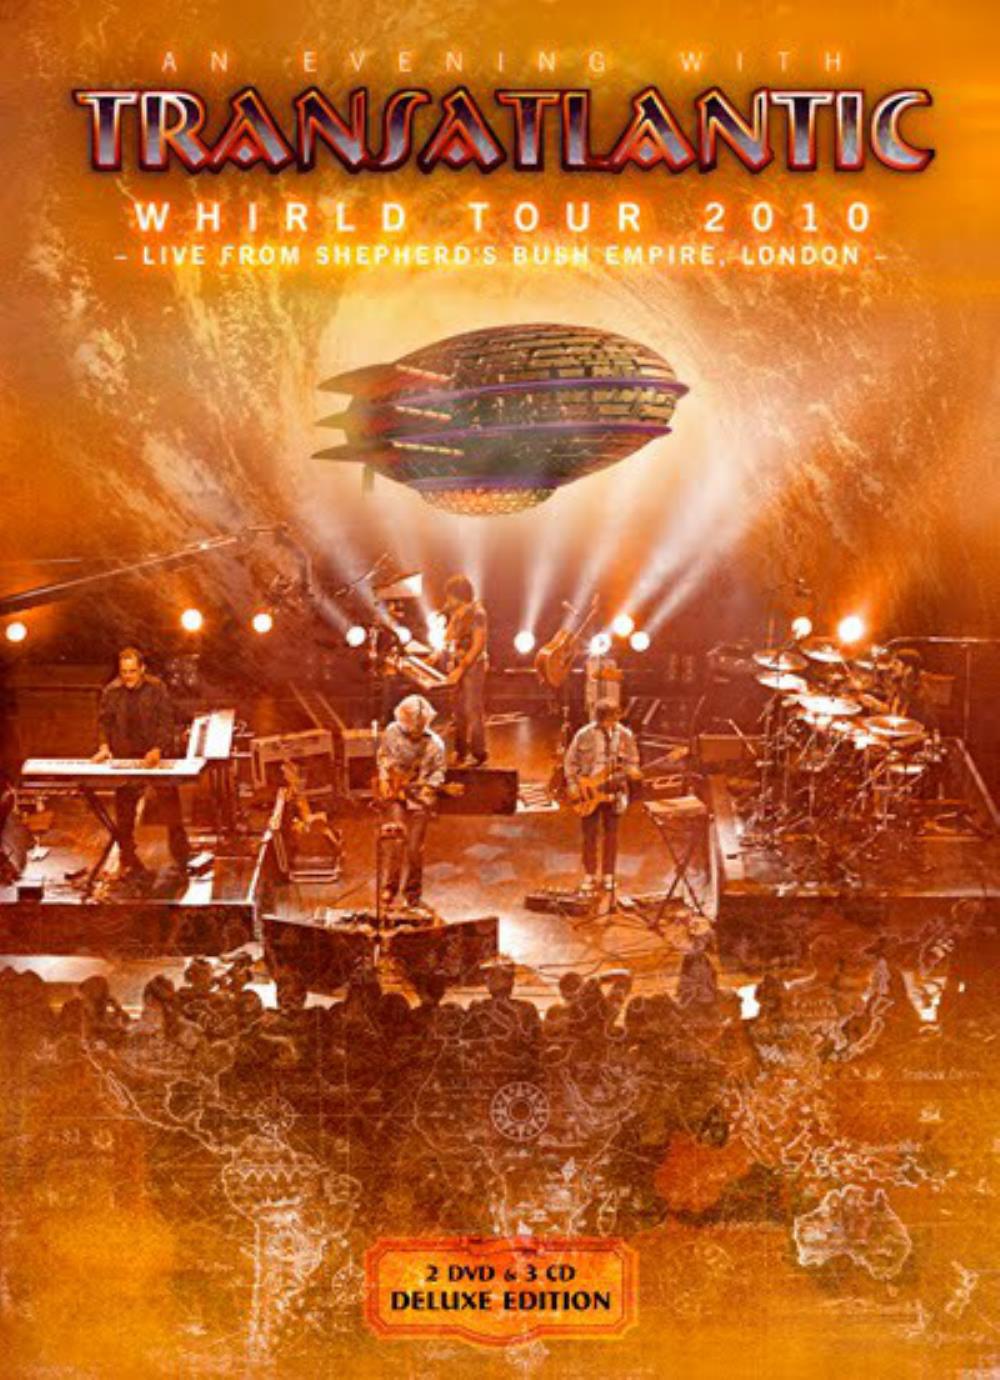 Transatlantic Whirld Tour 2010 - Live from Shepherd's Bush Empire, London album cover